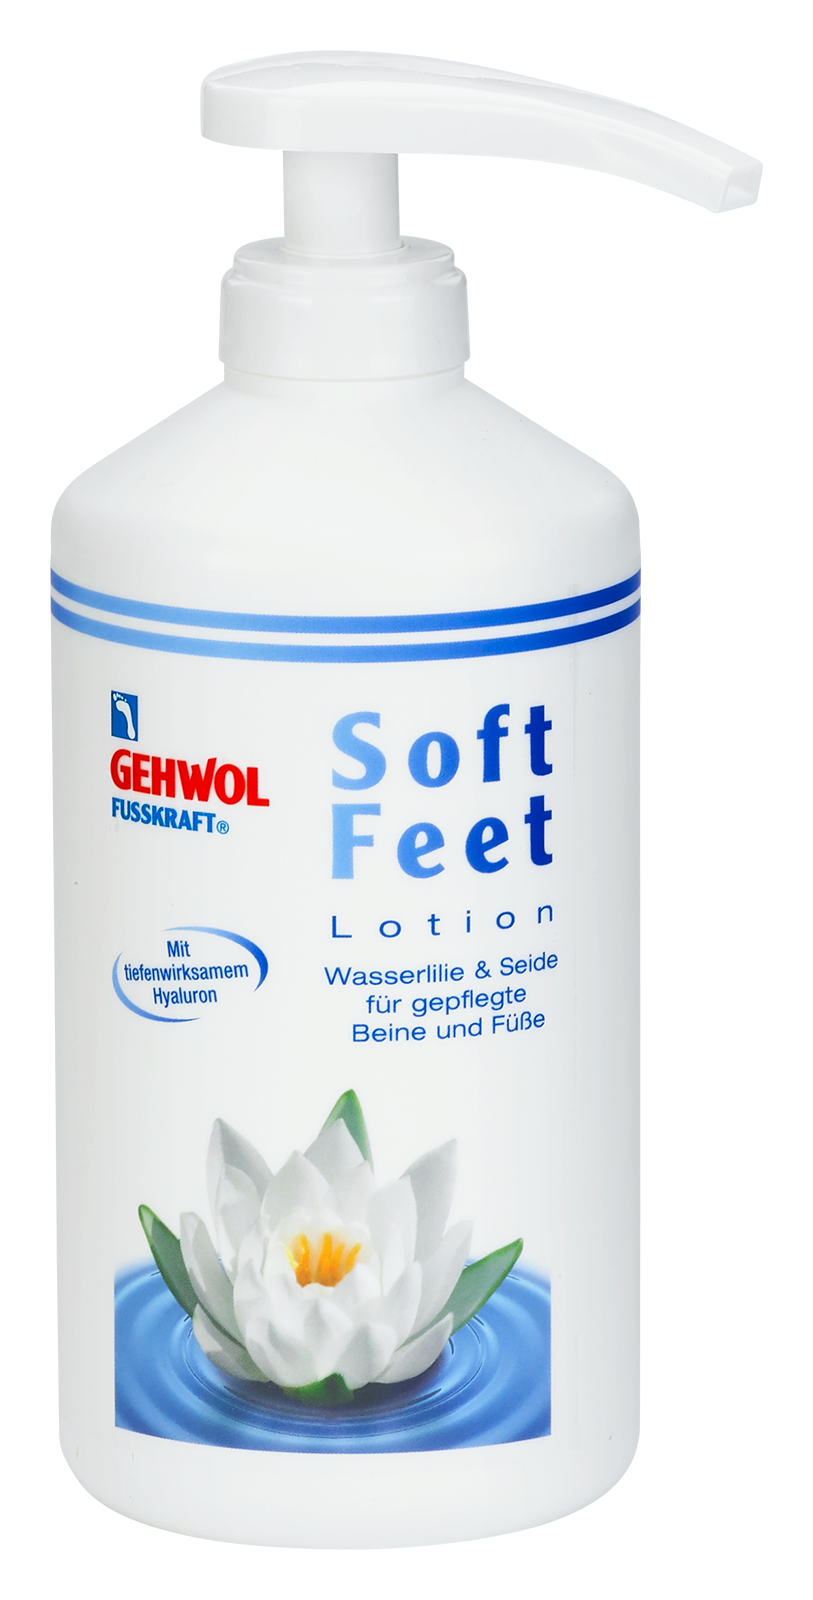 Gehwol Fusskraft soft feet lotion 500 ml med pumpe